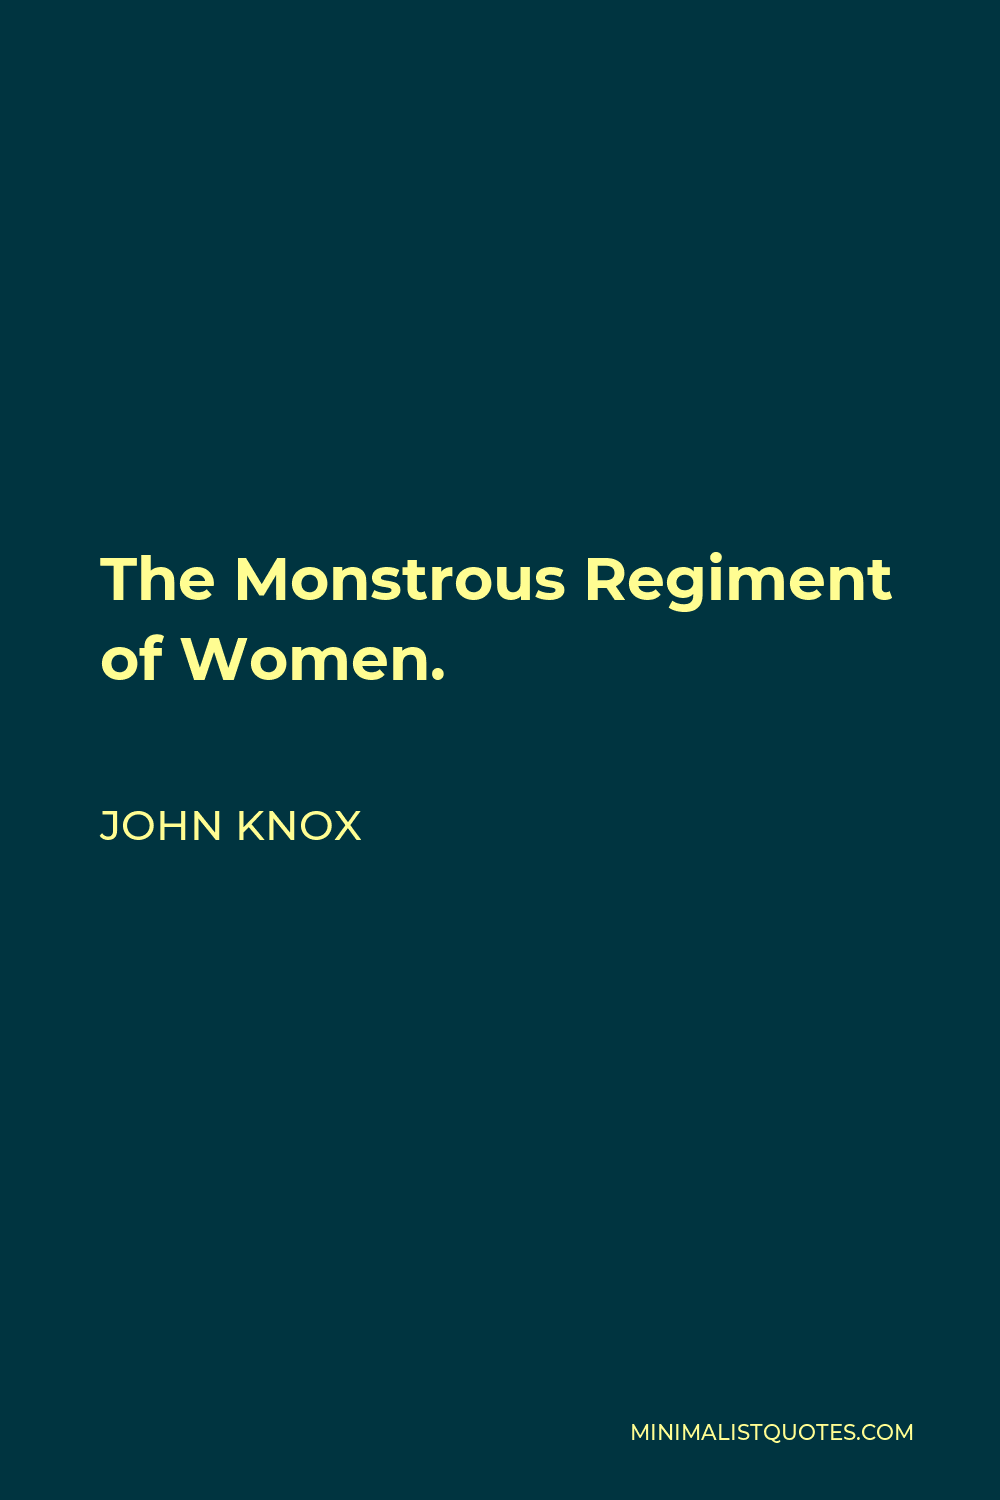 John Knox Quote - The Monstrous Regiment of Women.